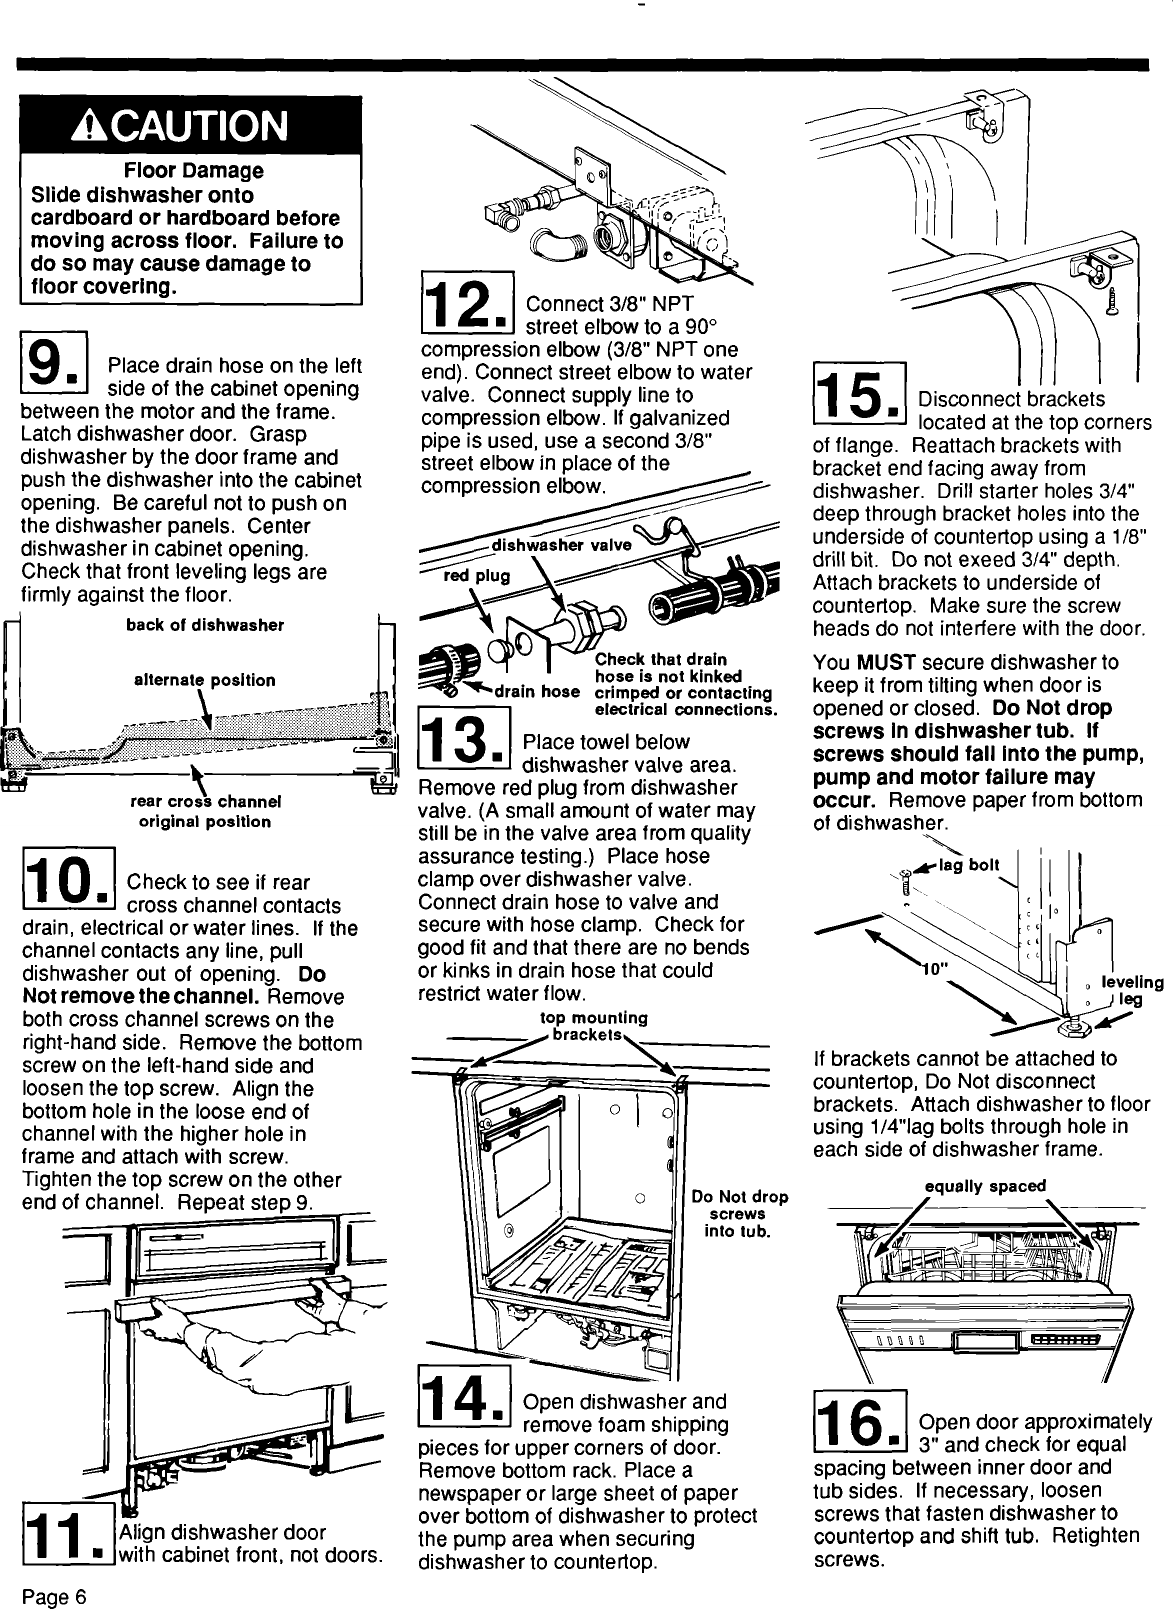 Page 6 of 8 - Kitchenaid KUDI220T5 User Manual  DISHWASHER - Manuals And Guides L0907467